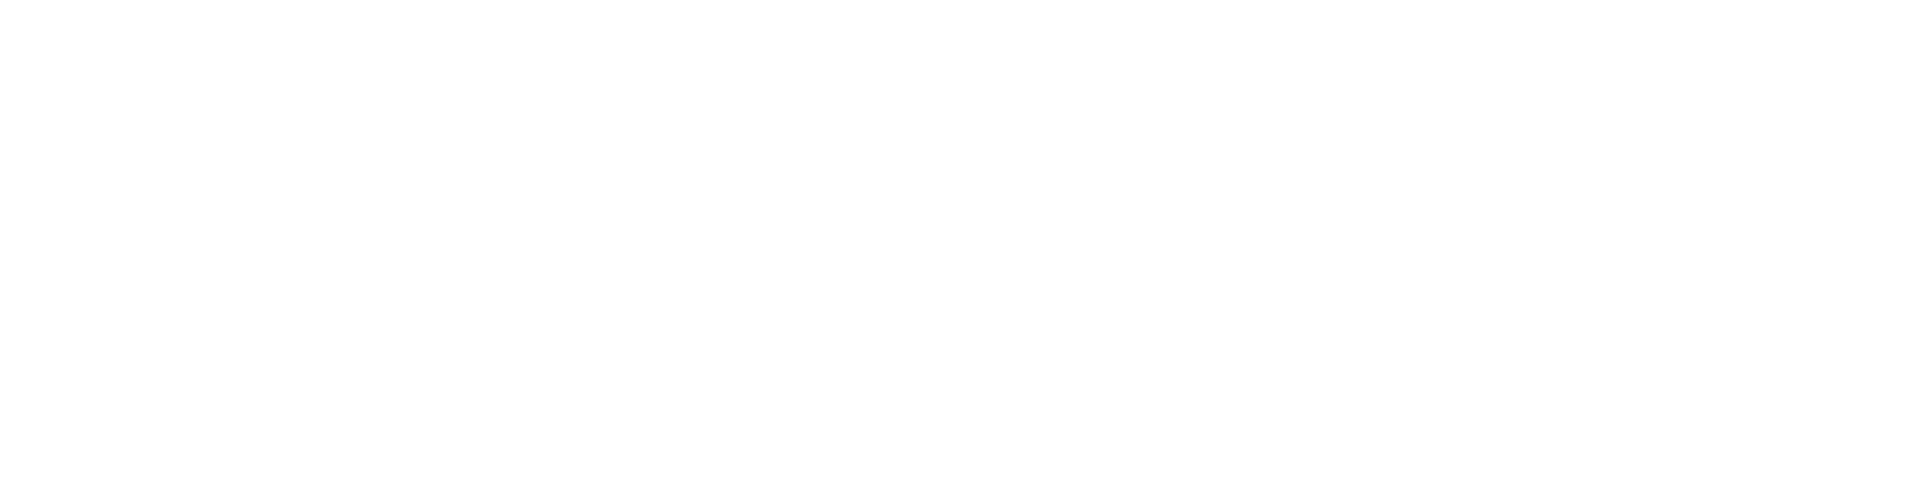 McClurg_logo_horiz_white